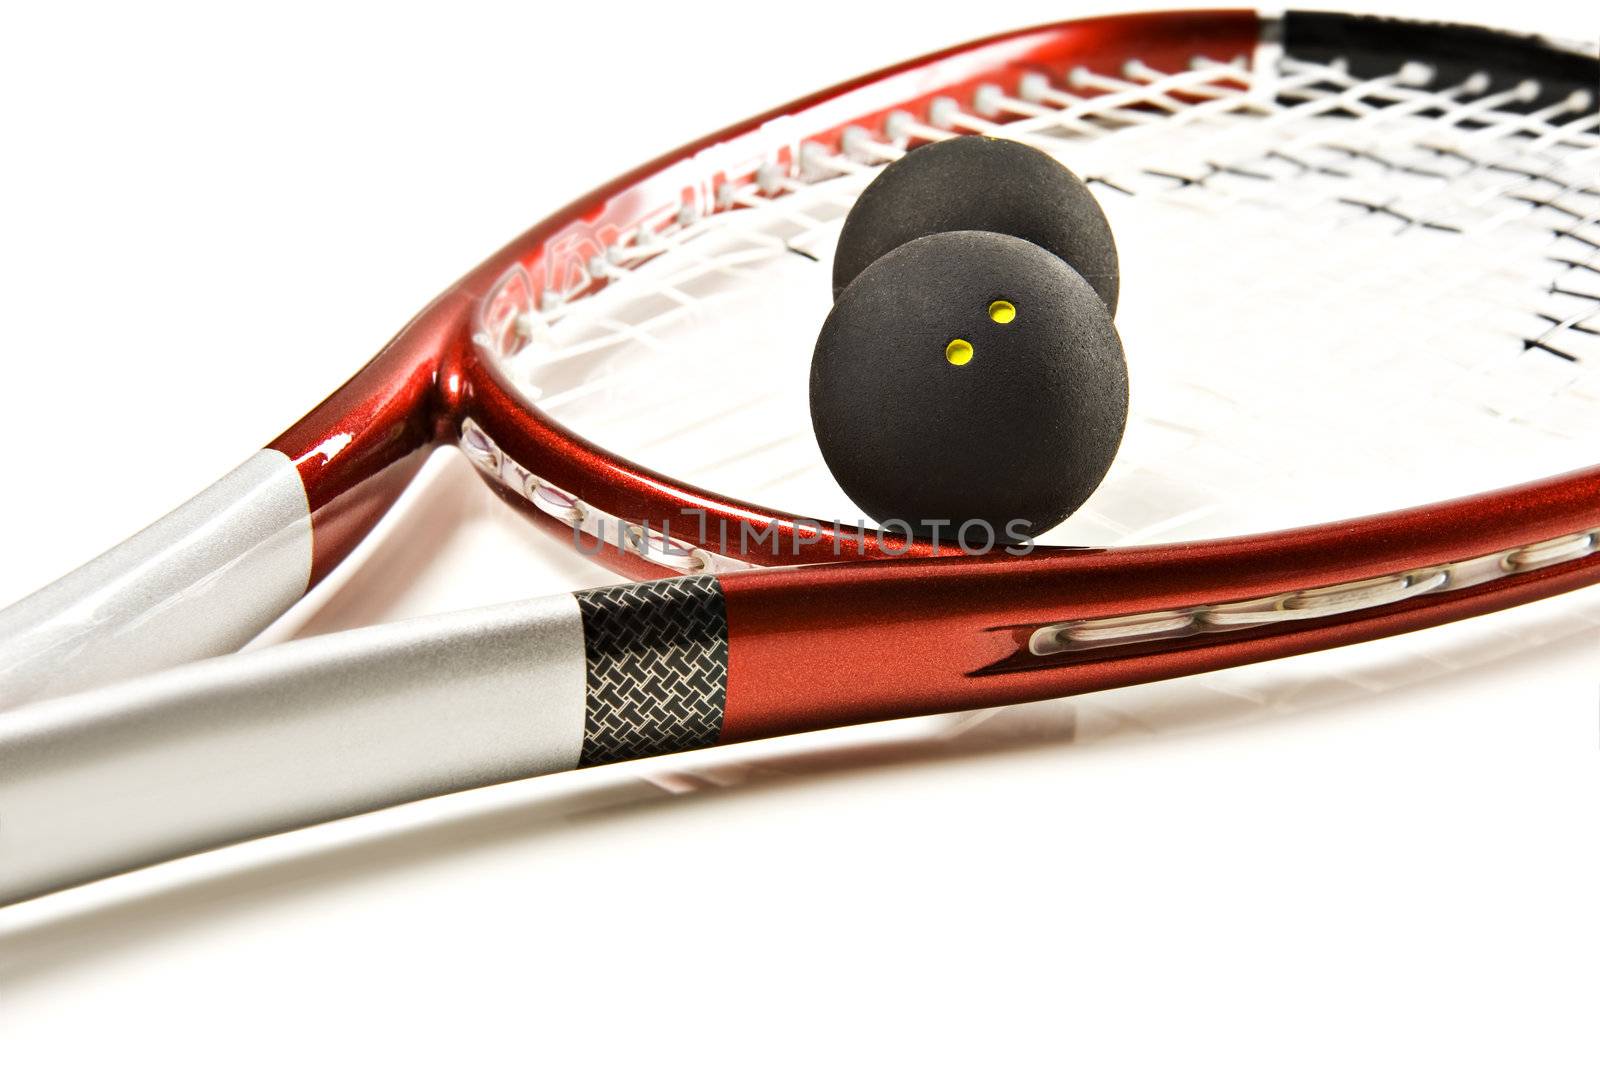 Squash racket and balls by tish1